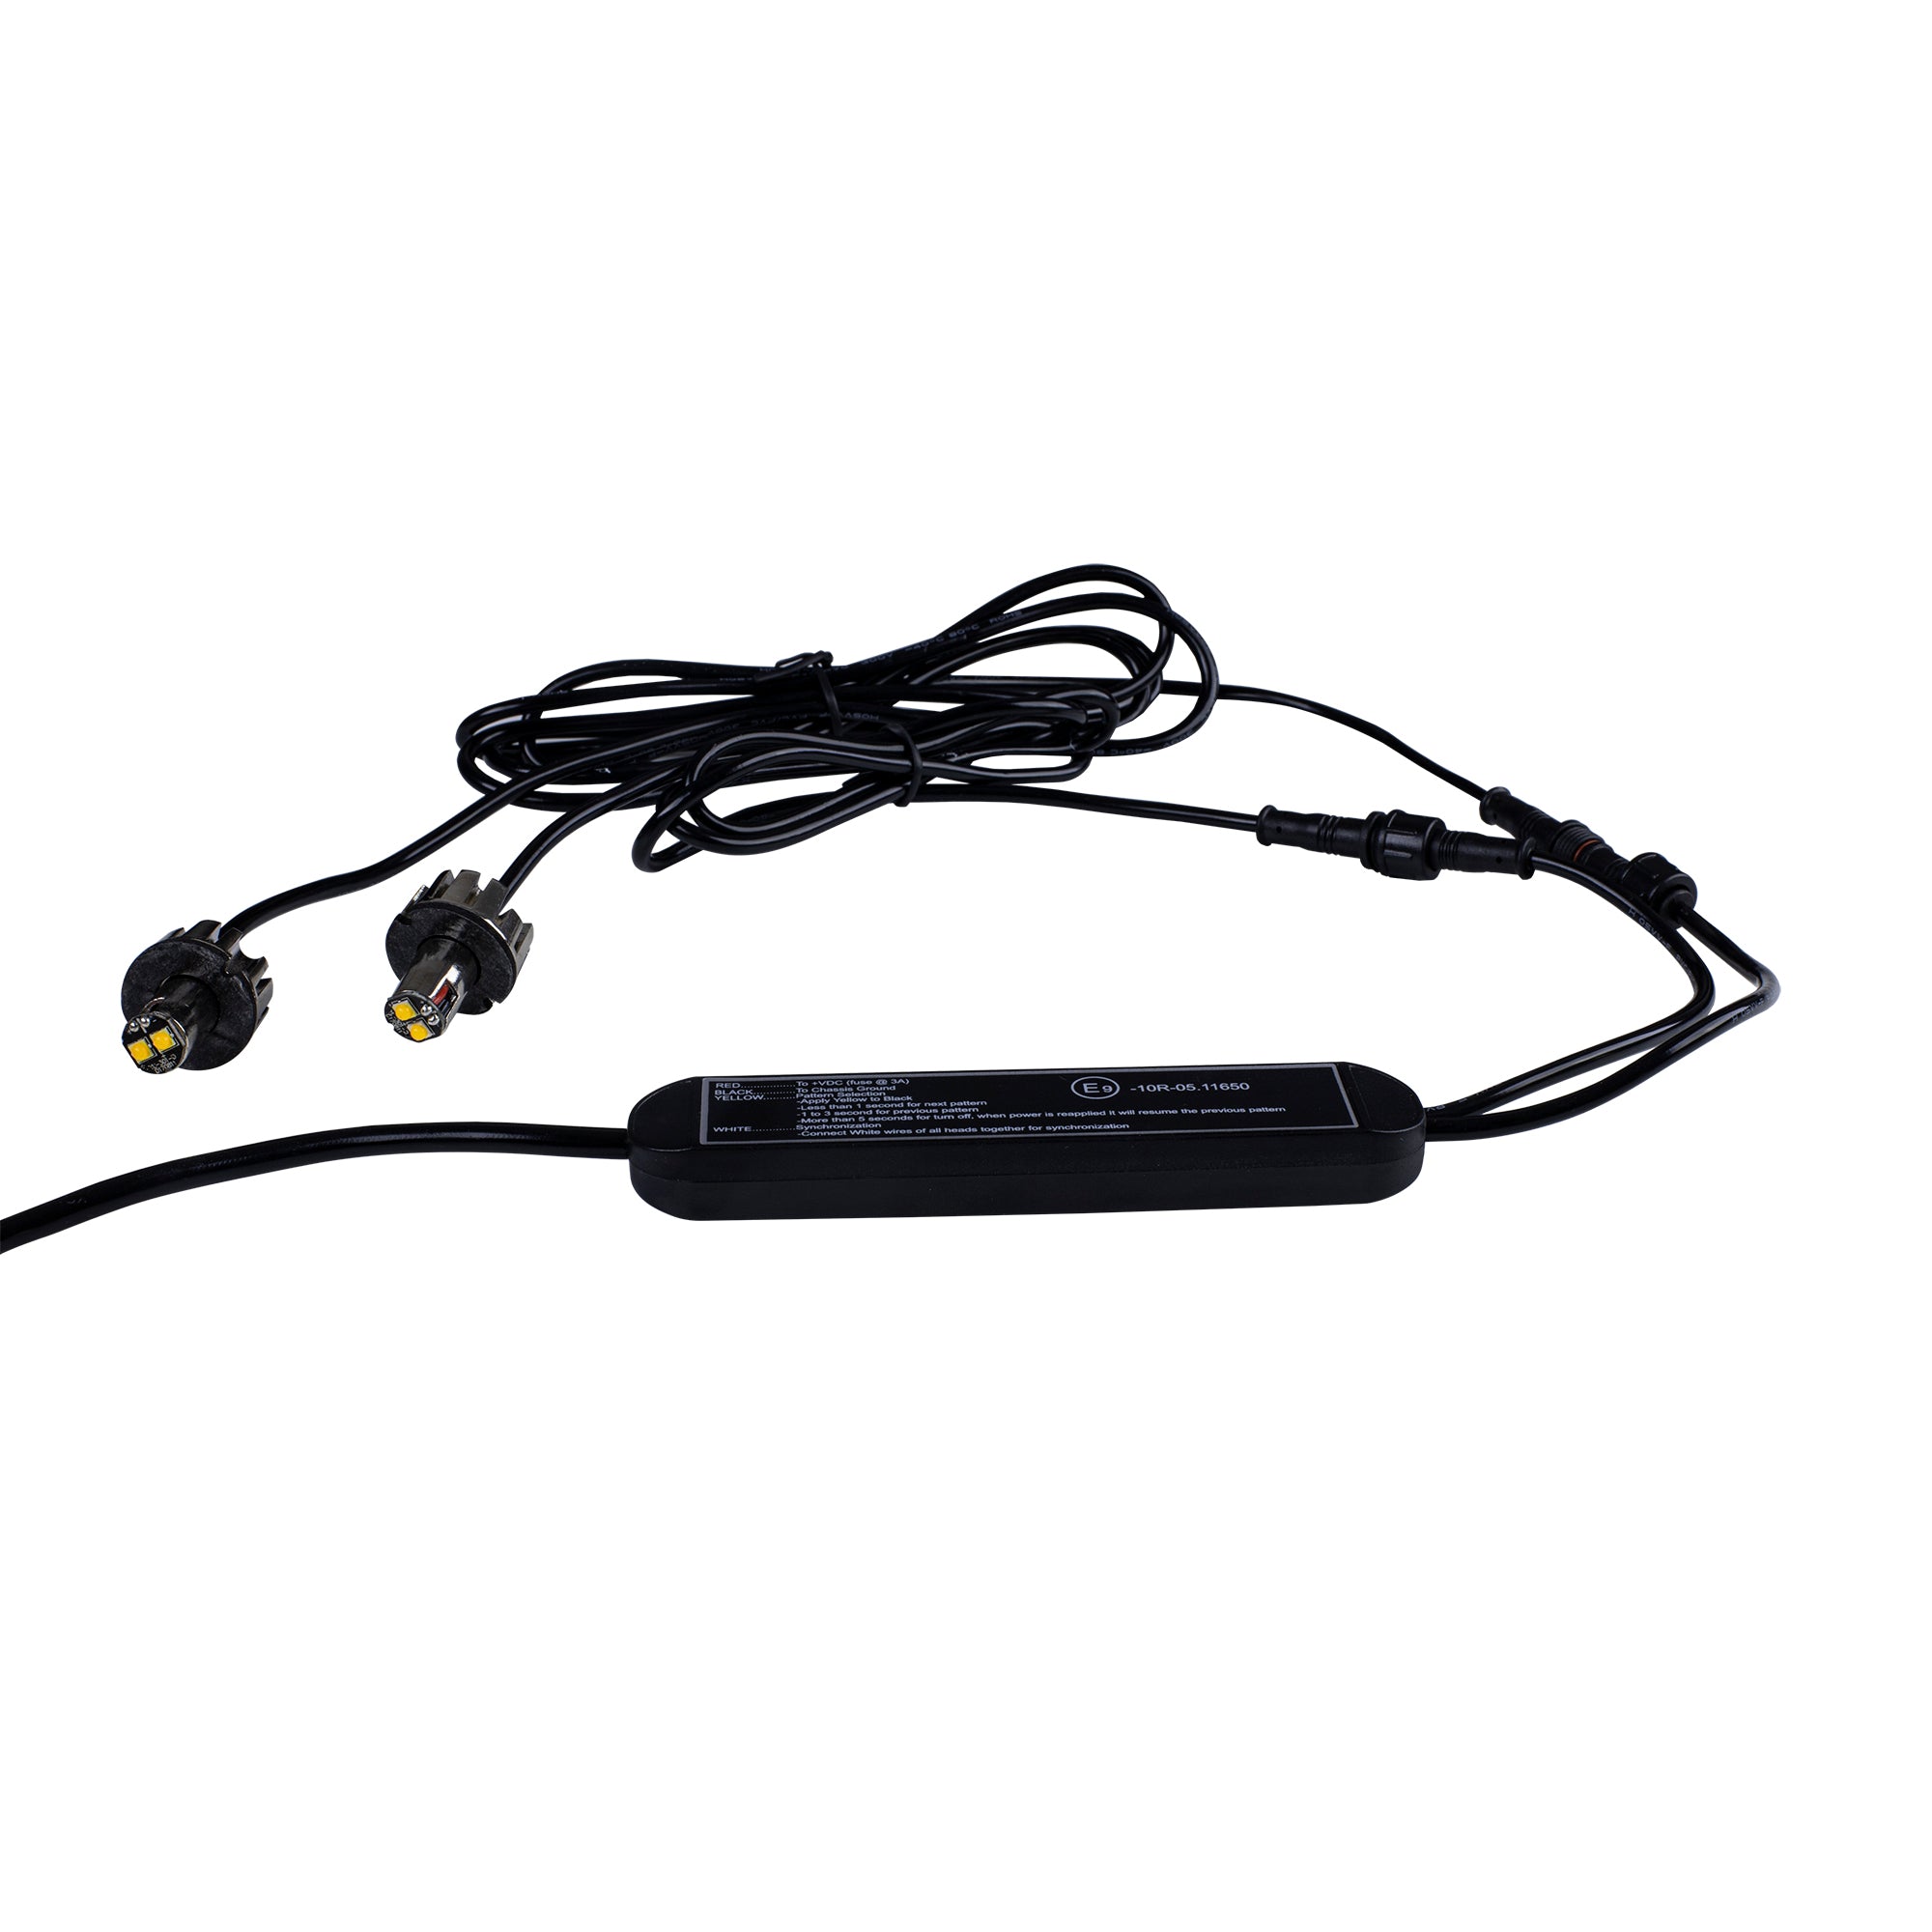 Strands Strobe Light Kit til spotlys og kørelygter - spo-cs-deaktiveret - spo-standard - spo-aktiveret - spo-notify-me